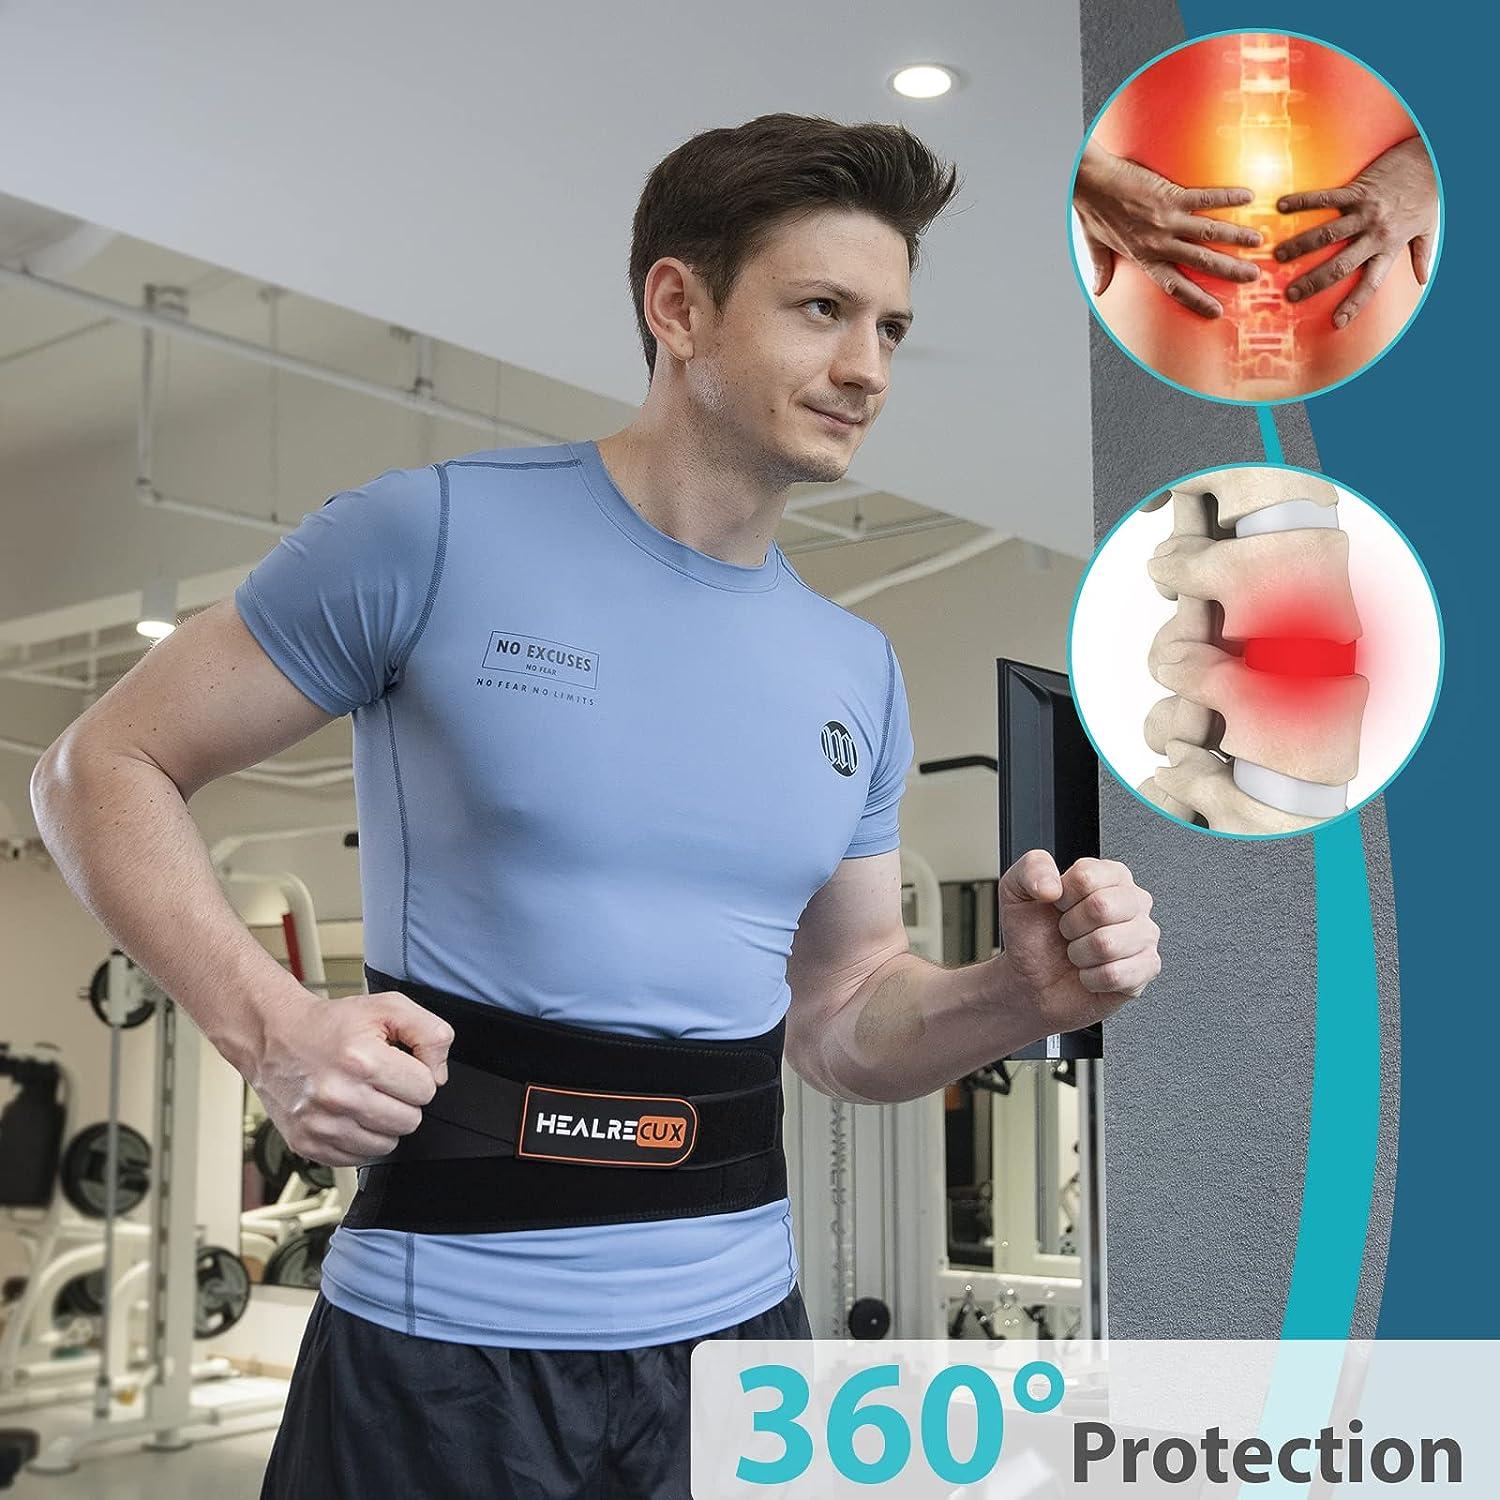 Lower Back Brace and Support Belt for Men and Women Adjustable